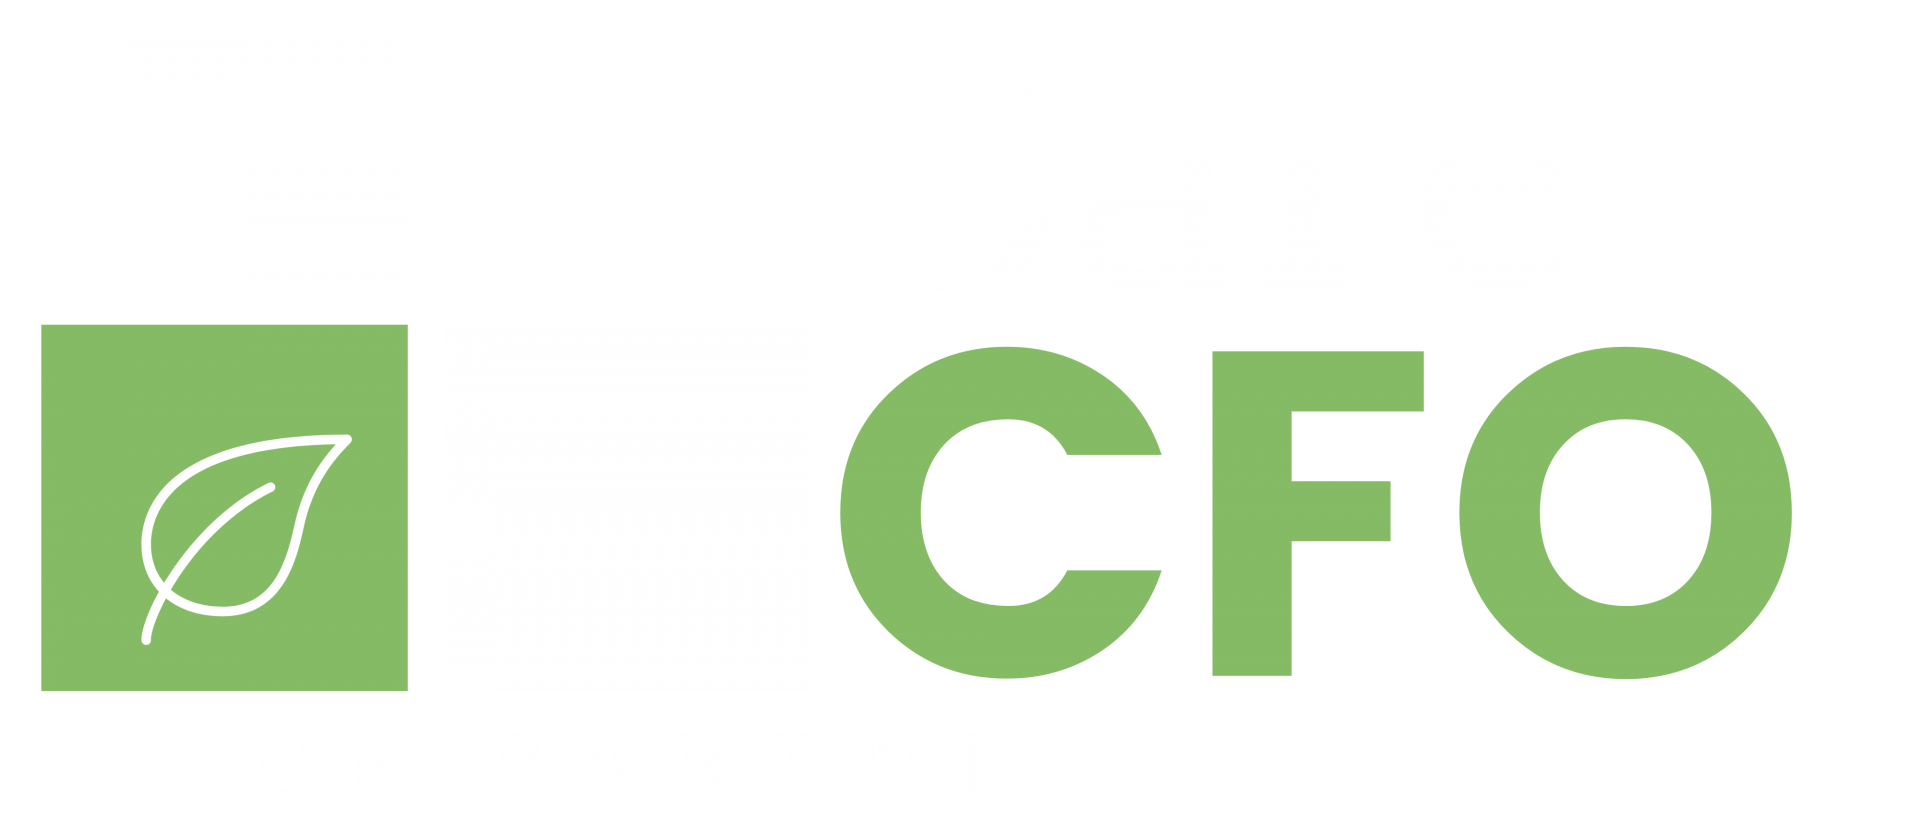 CareCFO Logo 